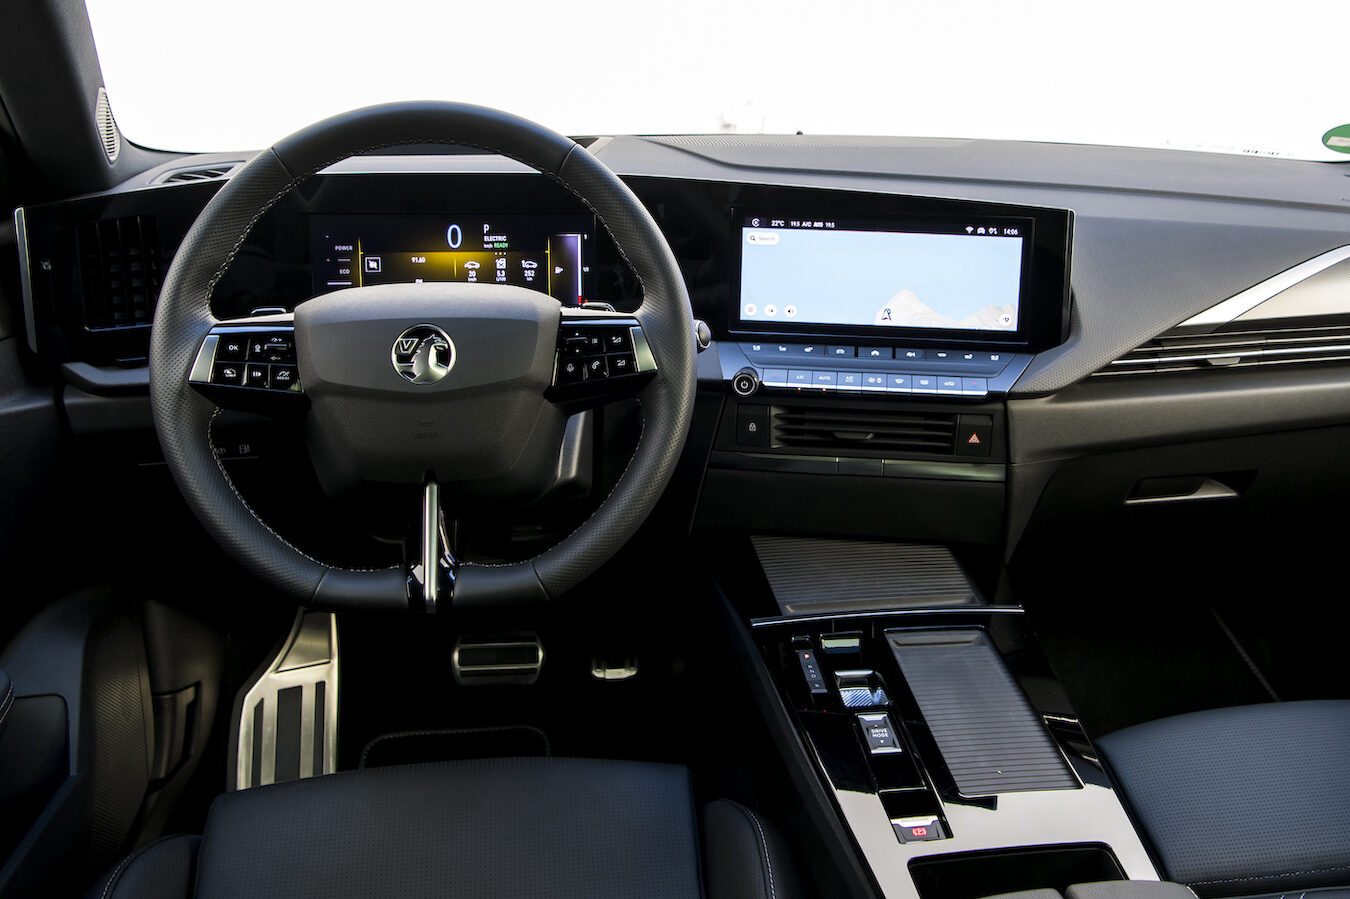 Vauxhall Opel Astra PHEV interior - EVs Unplugged